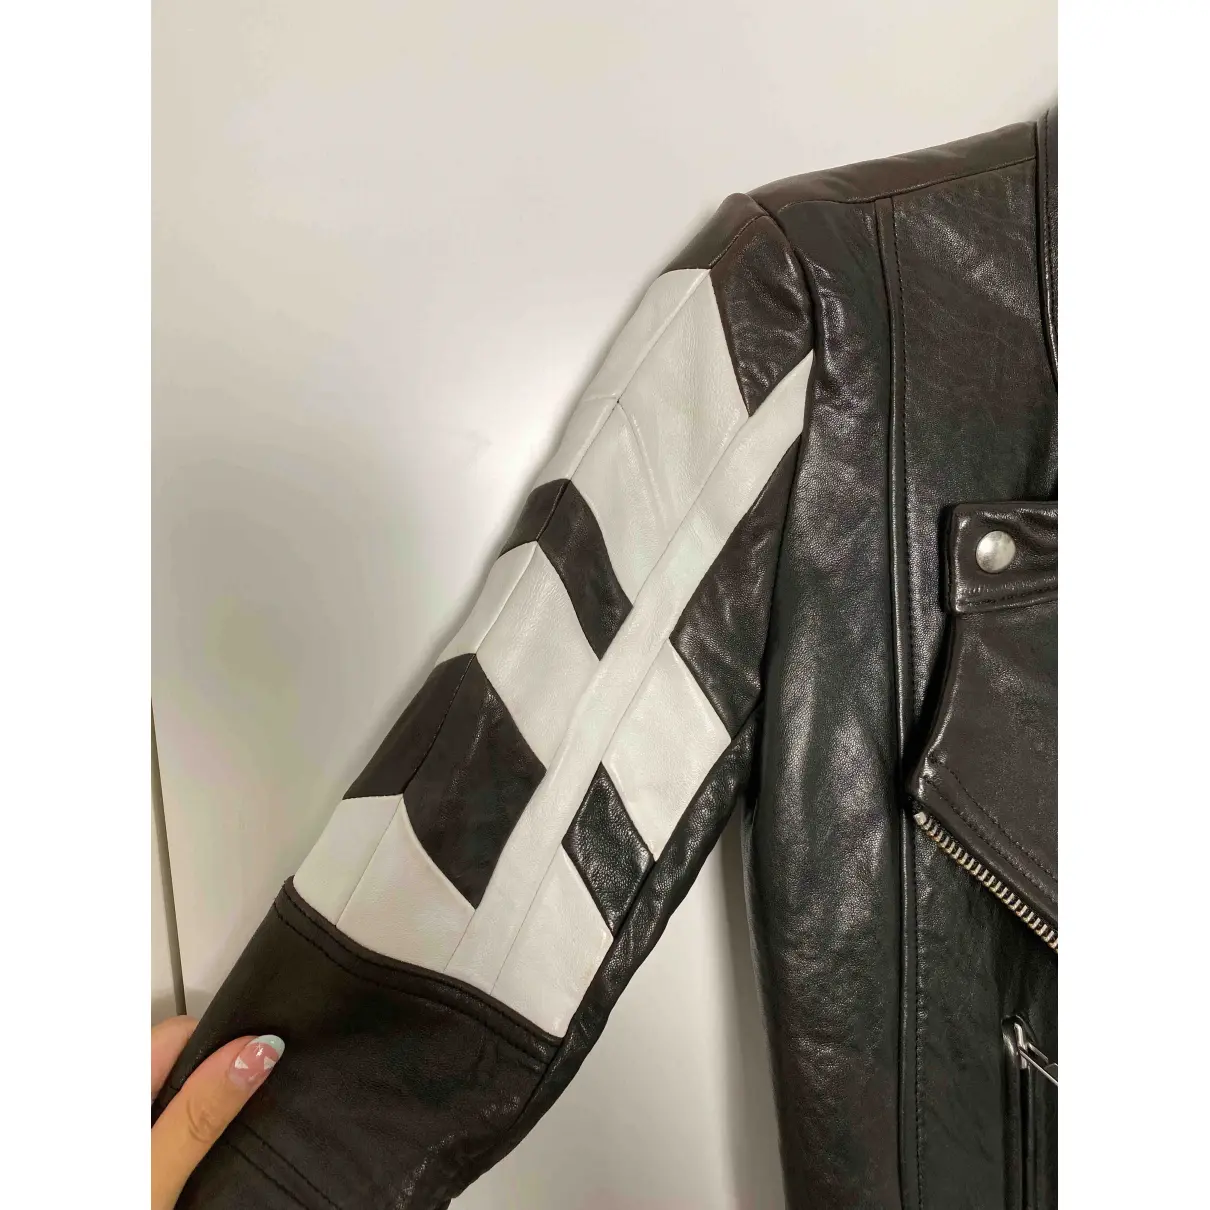 Buy Iro Leather jacket online